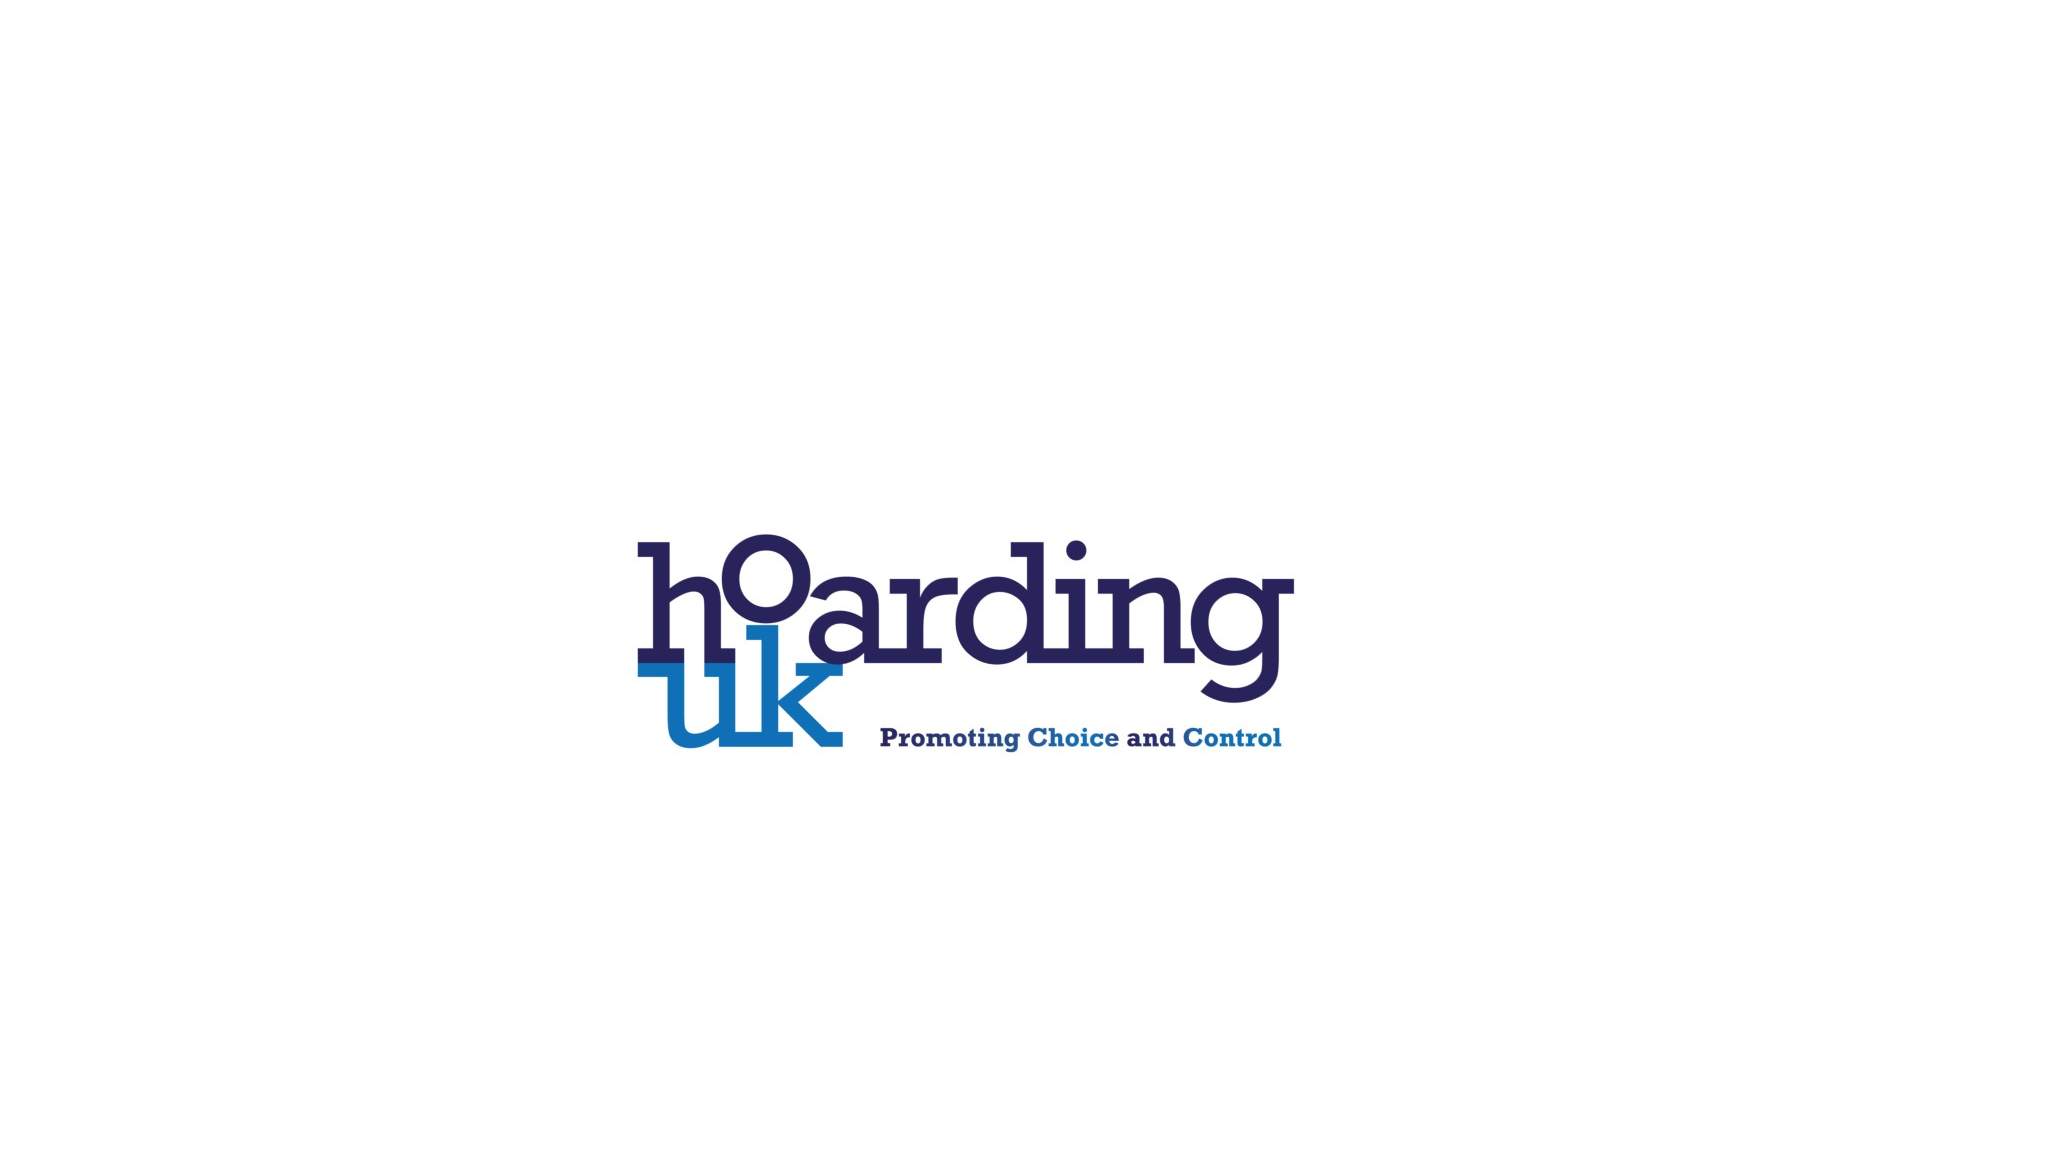 HoardingUK logo